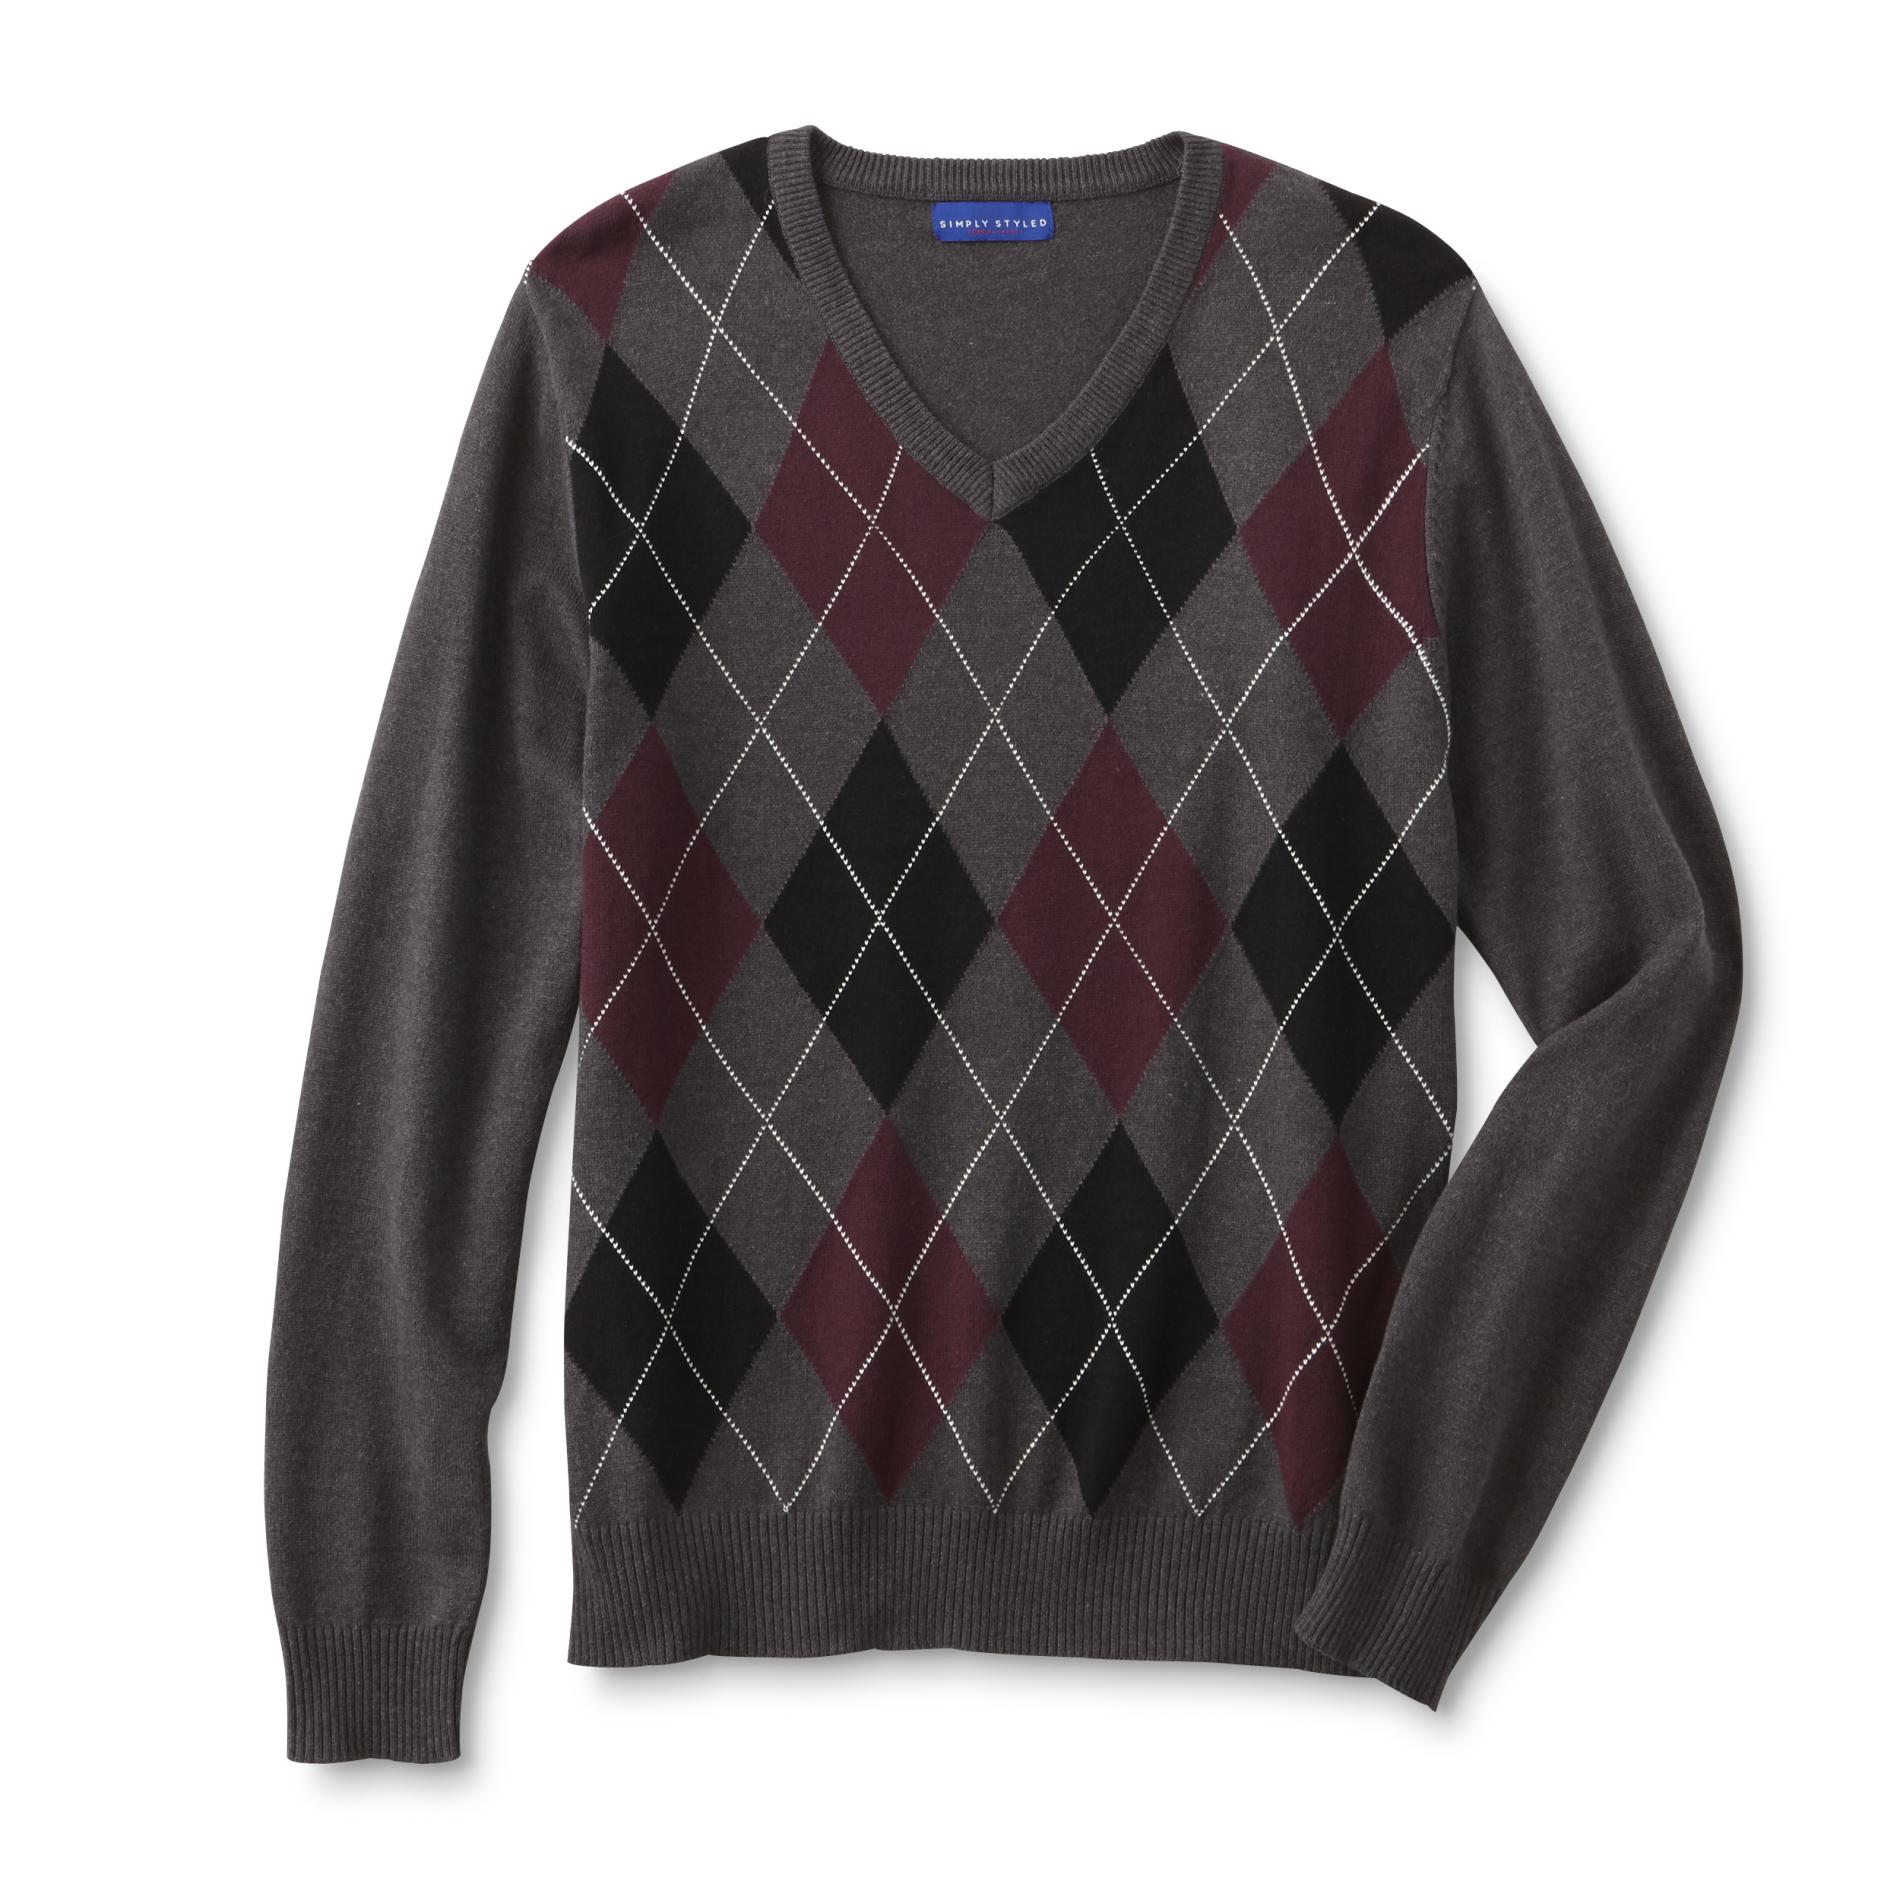 Simply Styled Men's V-Neck Sweater - Argyle